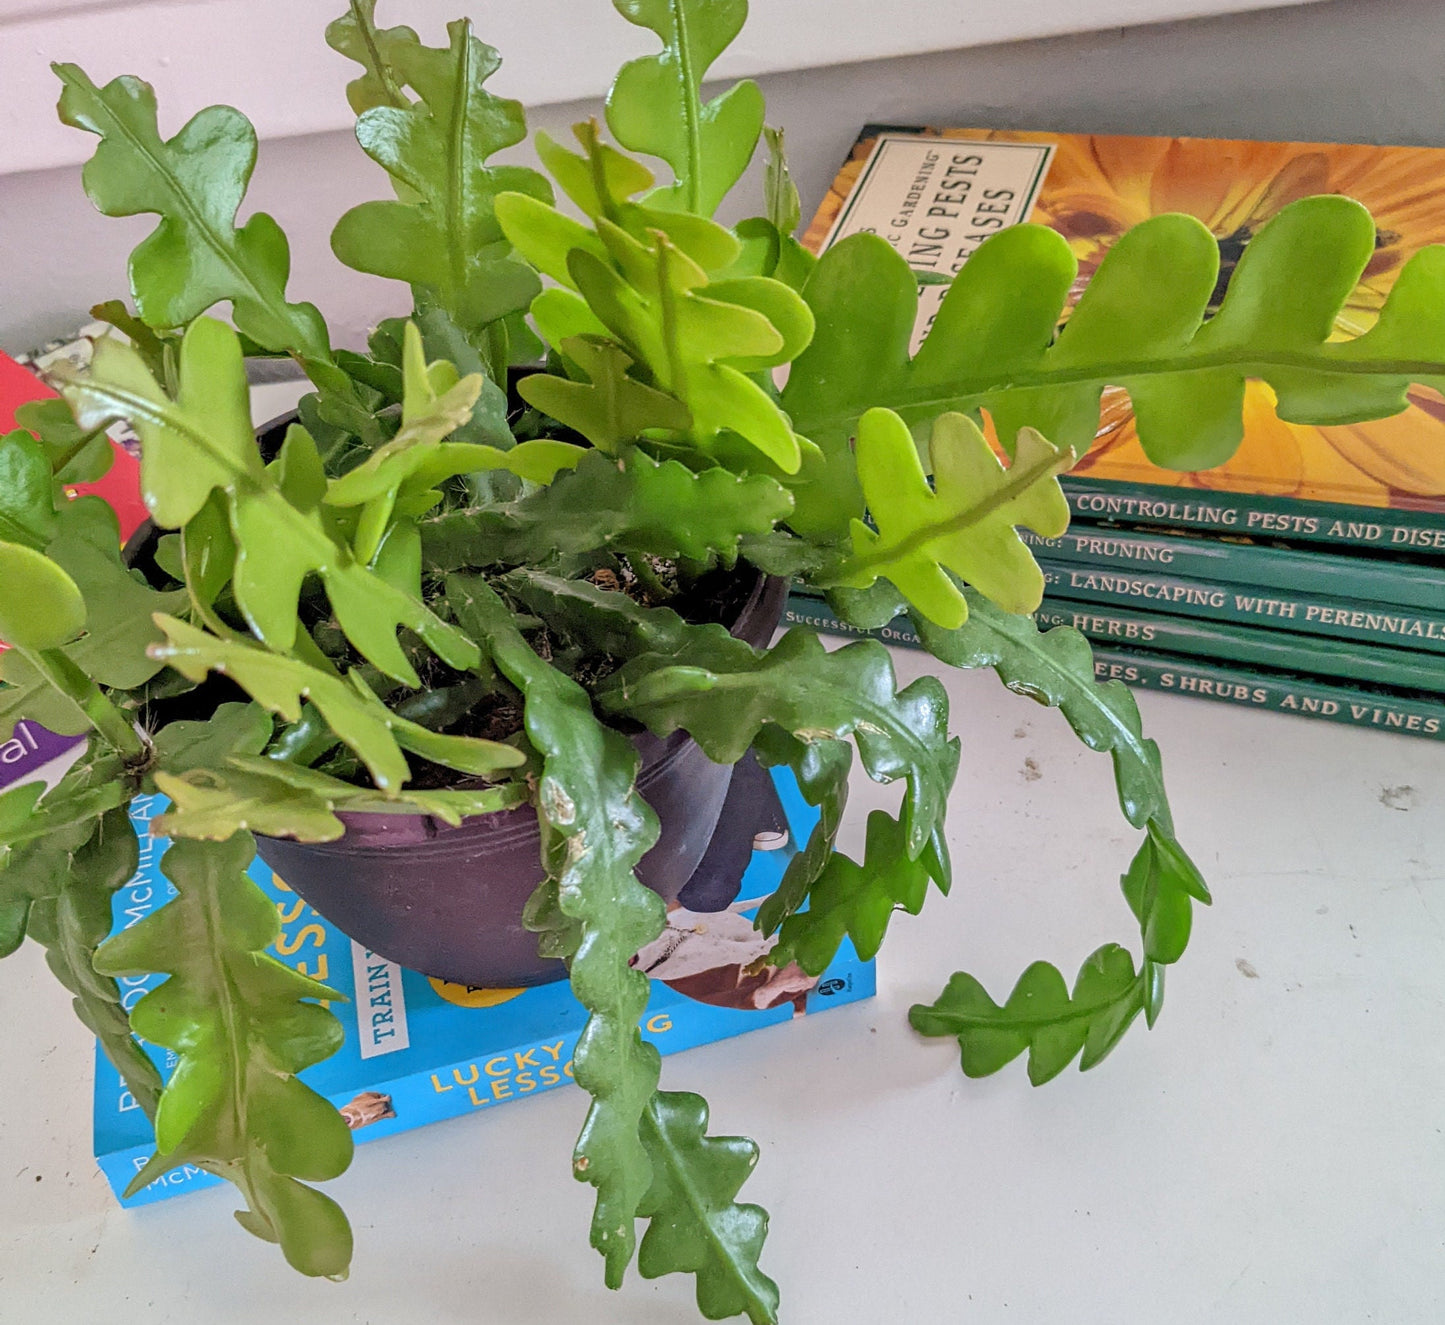 Fishbone cactus - Ric Rac, Zigzag, Fishbone, orchid cactus, Houseplant - Shade Plant Succulent/Cactus - NOW with Bonus FREE Gift